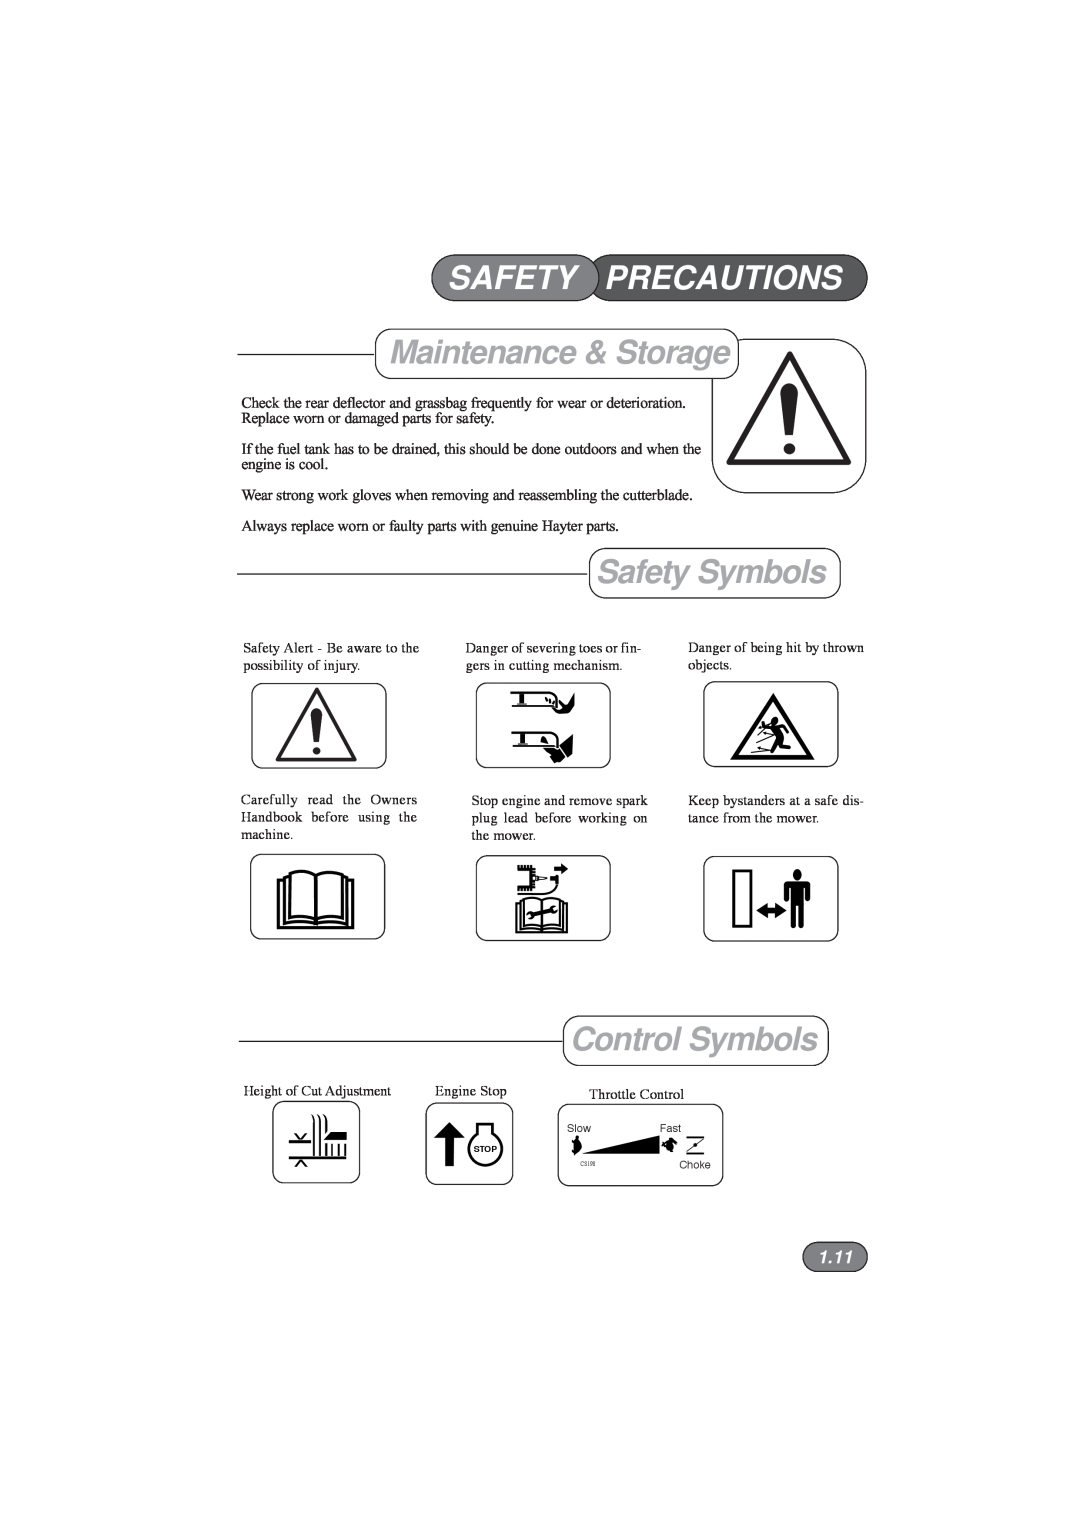 Hayter Mowers 433E, 435E, 432E, 434E manual Safety Symbols, Control Symbols, 1.11, Safety Precautions, Maintenance & Storage 